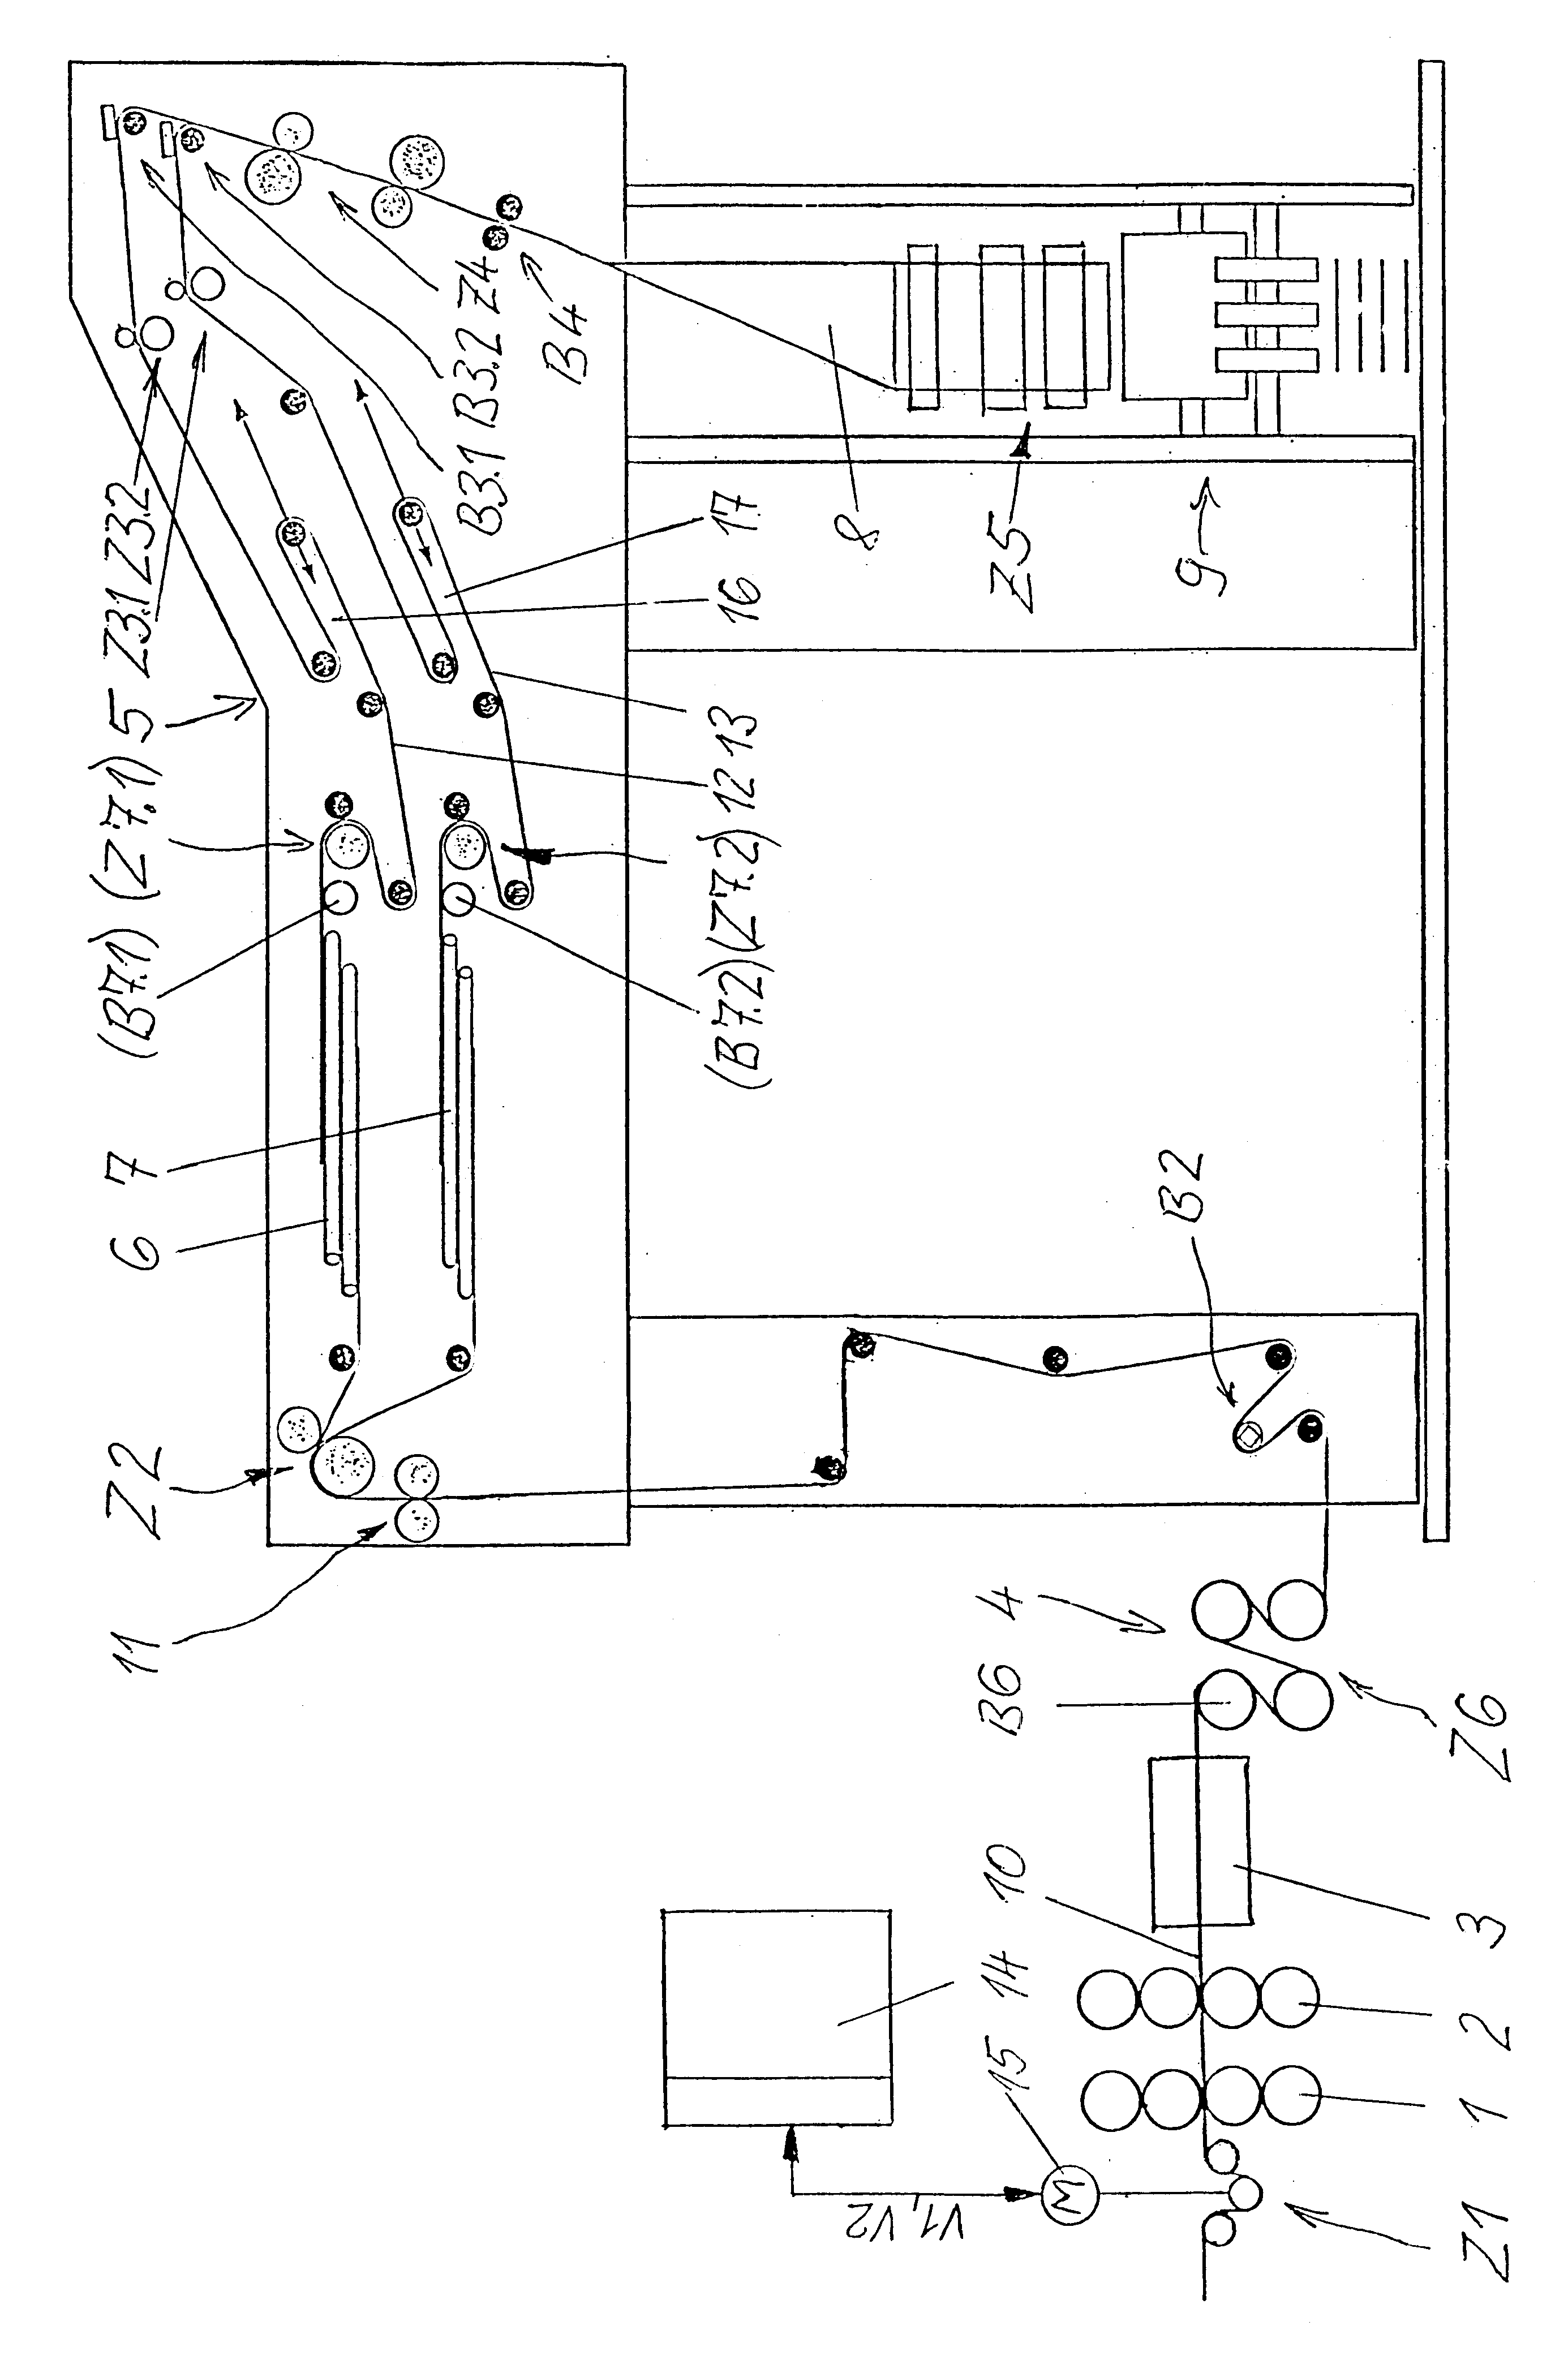 Method of operating a web-fed rotary printing machine